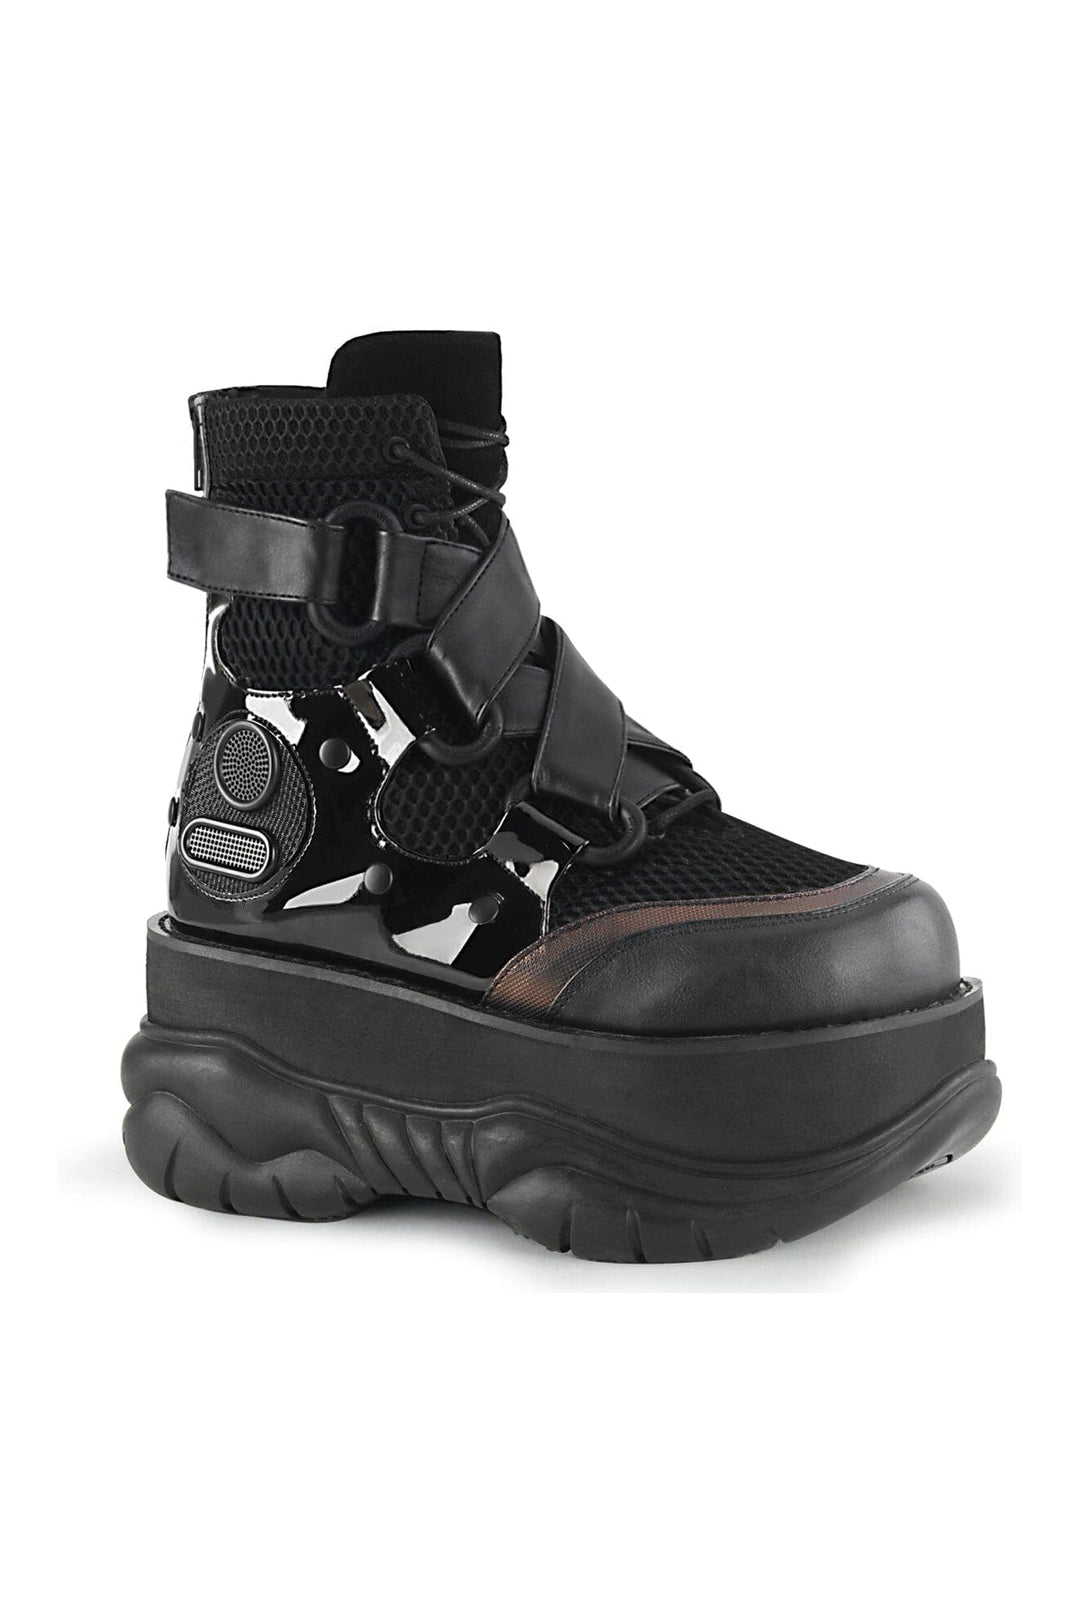 NEPTUNE-126 Black Vegan Leather Ankle Boot-Ankle Boots-Demonia-Black-10-Vegan Leather-SEXYSHOES.COM